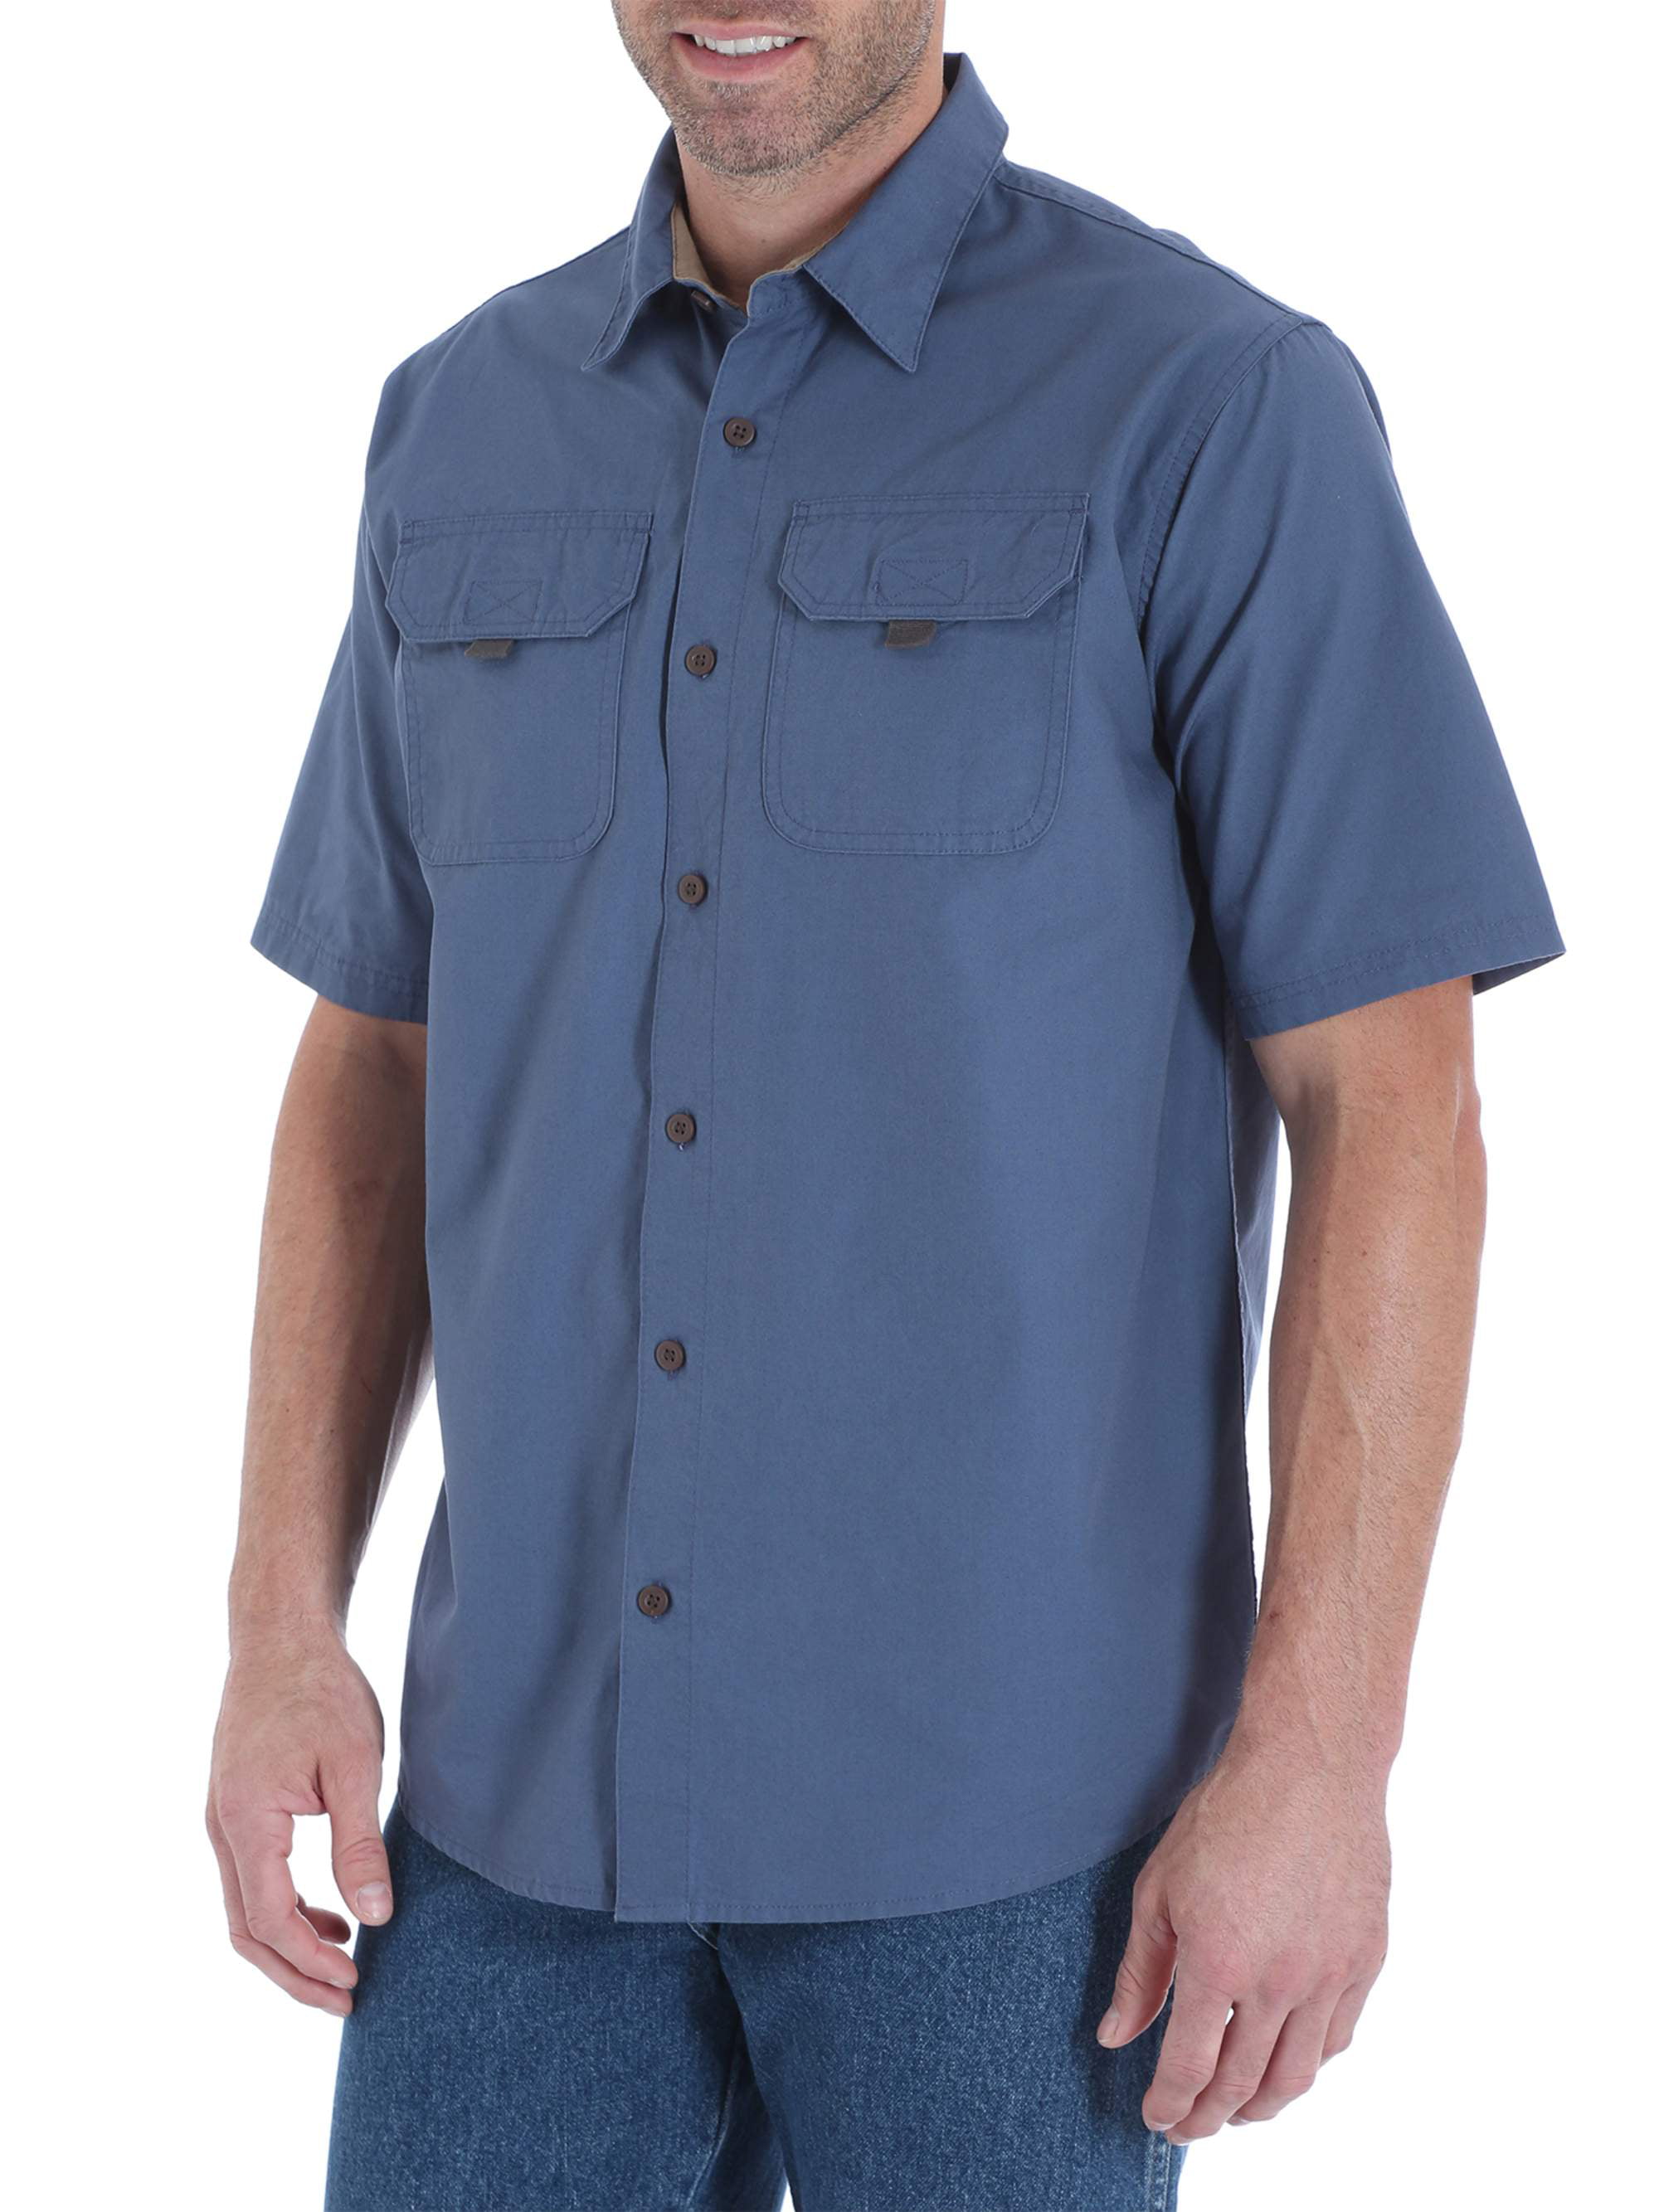 SK Studio Mens Short Sleeve Pocket Plaid Plus Size Shirt 